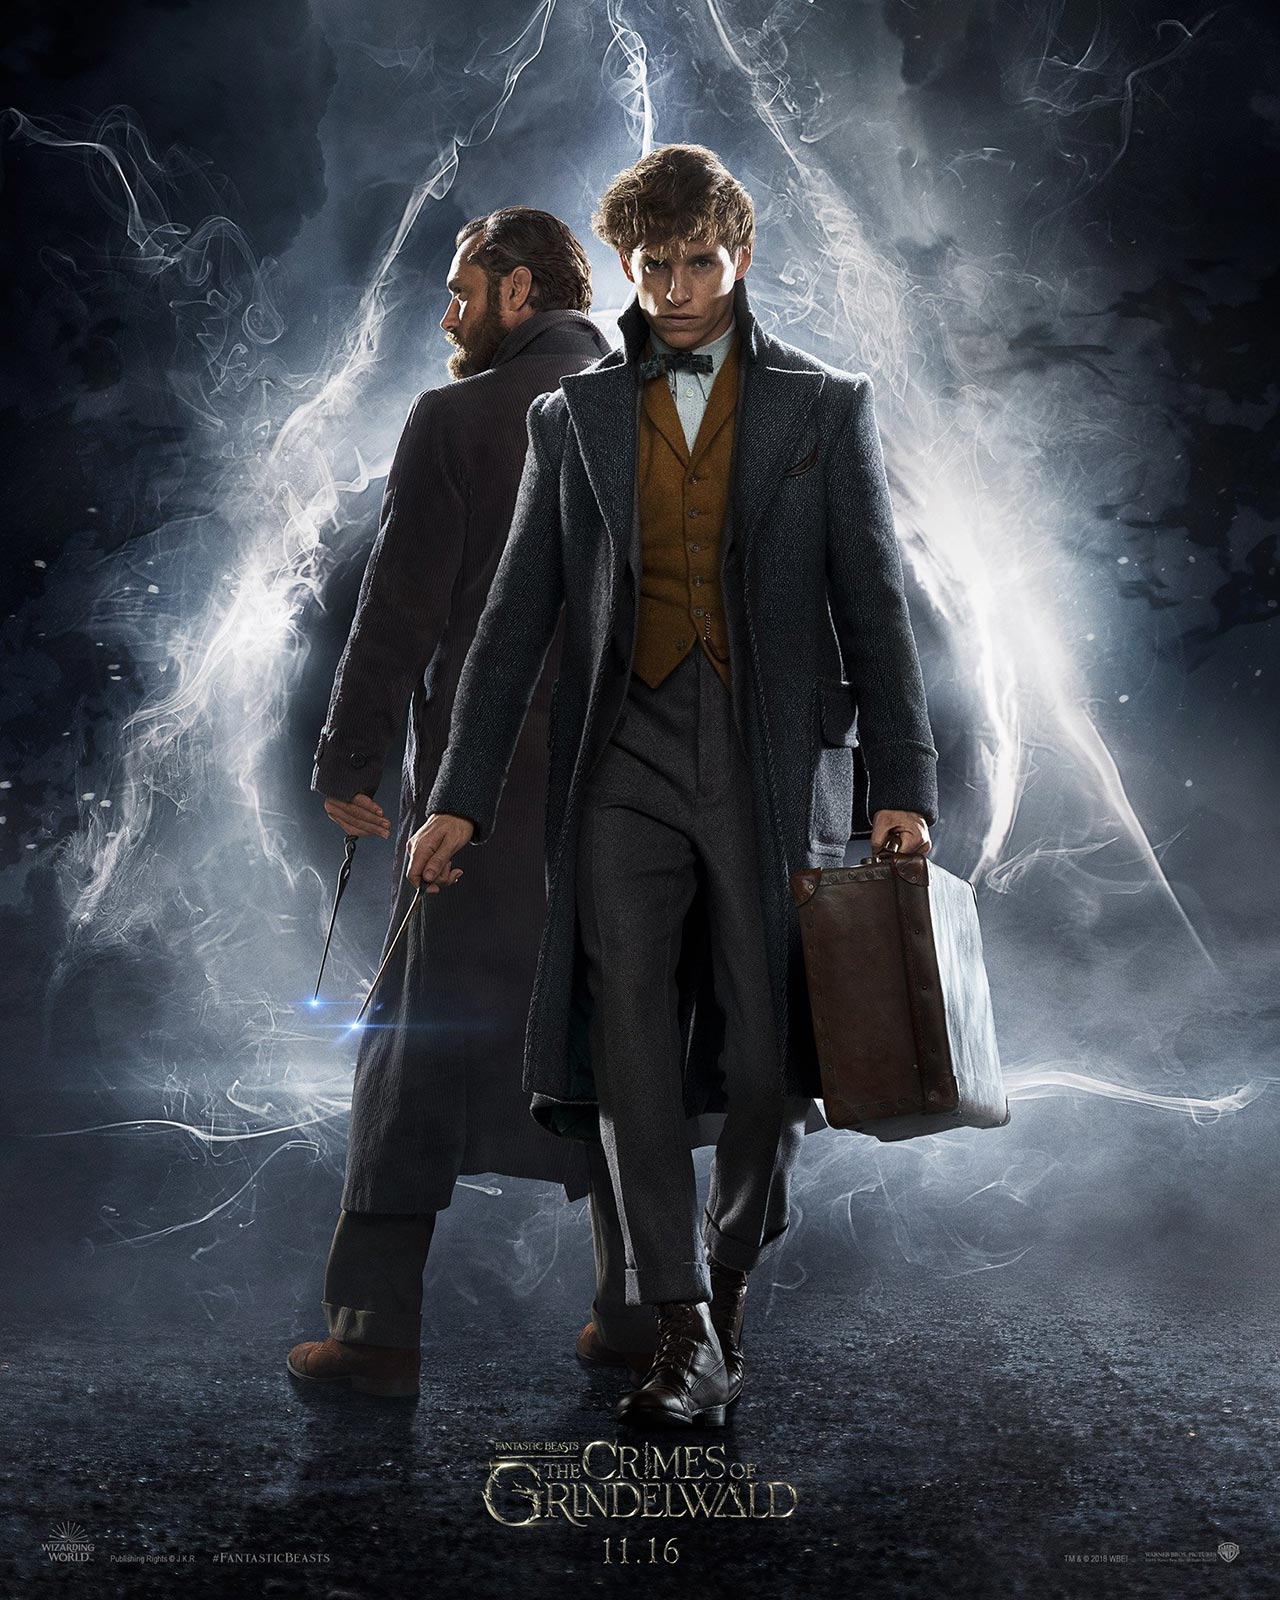 Fantastic Beasts 2' Trailer Officially Establishes Harry Potter